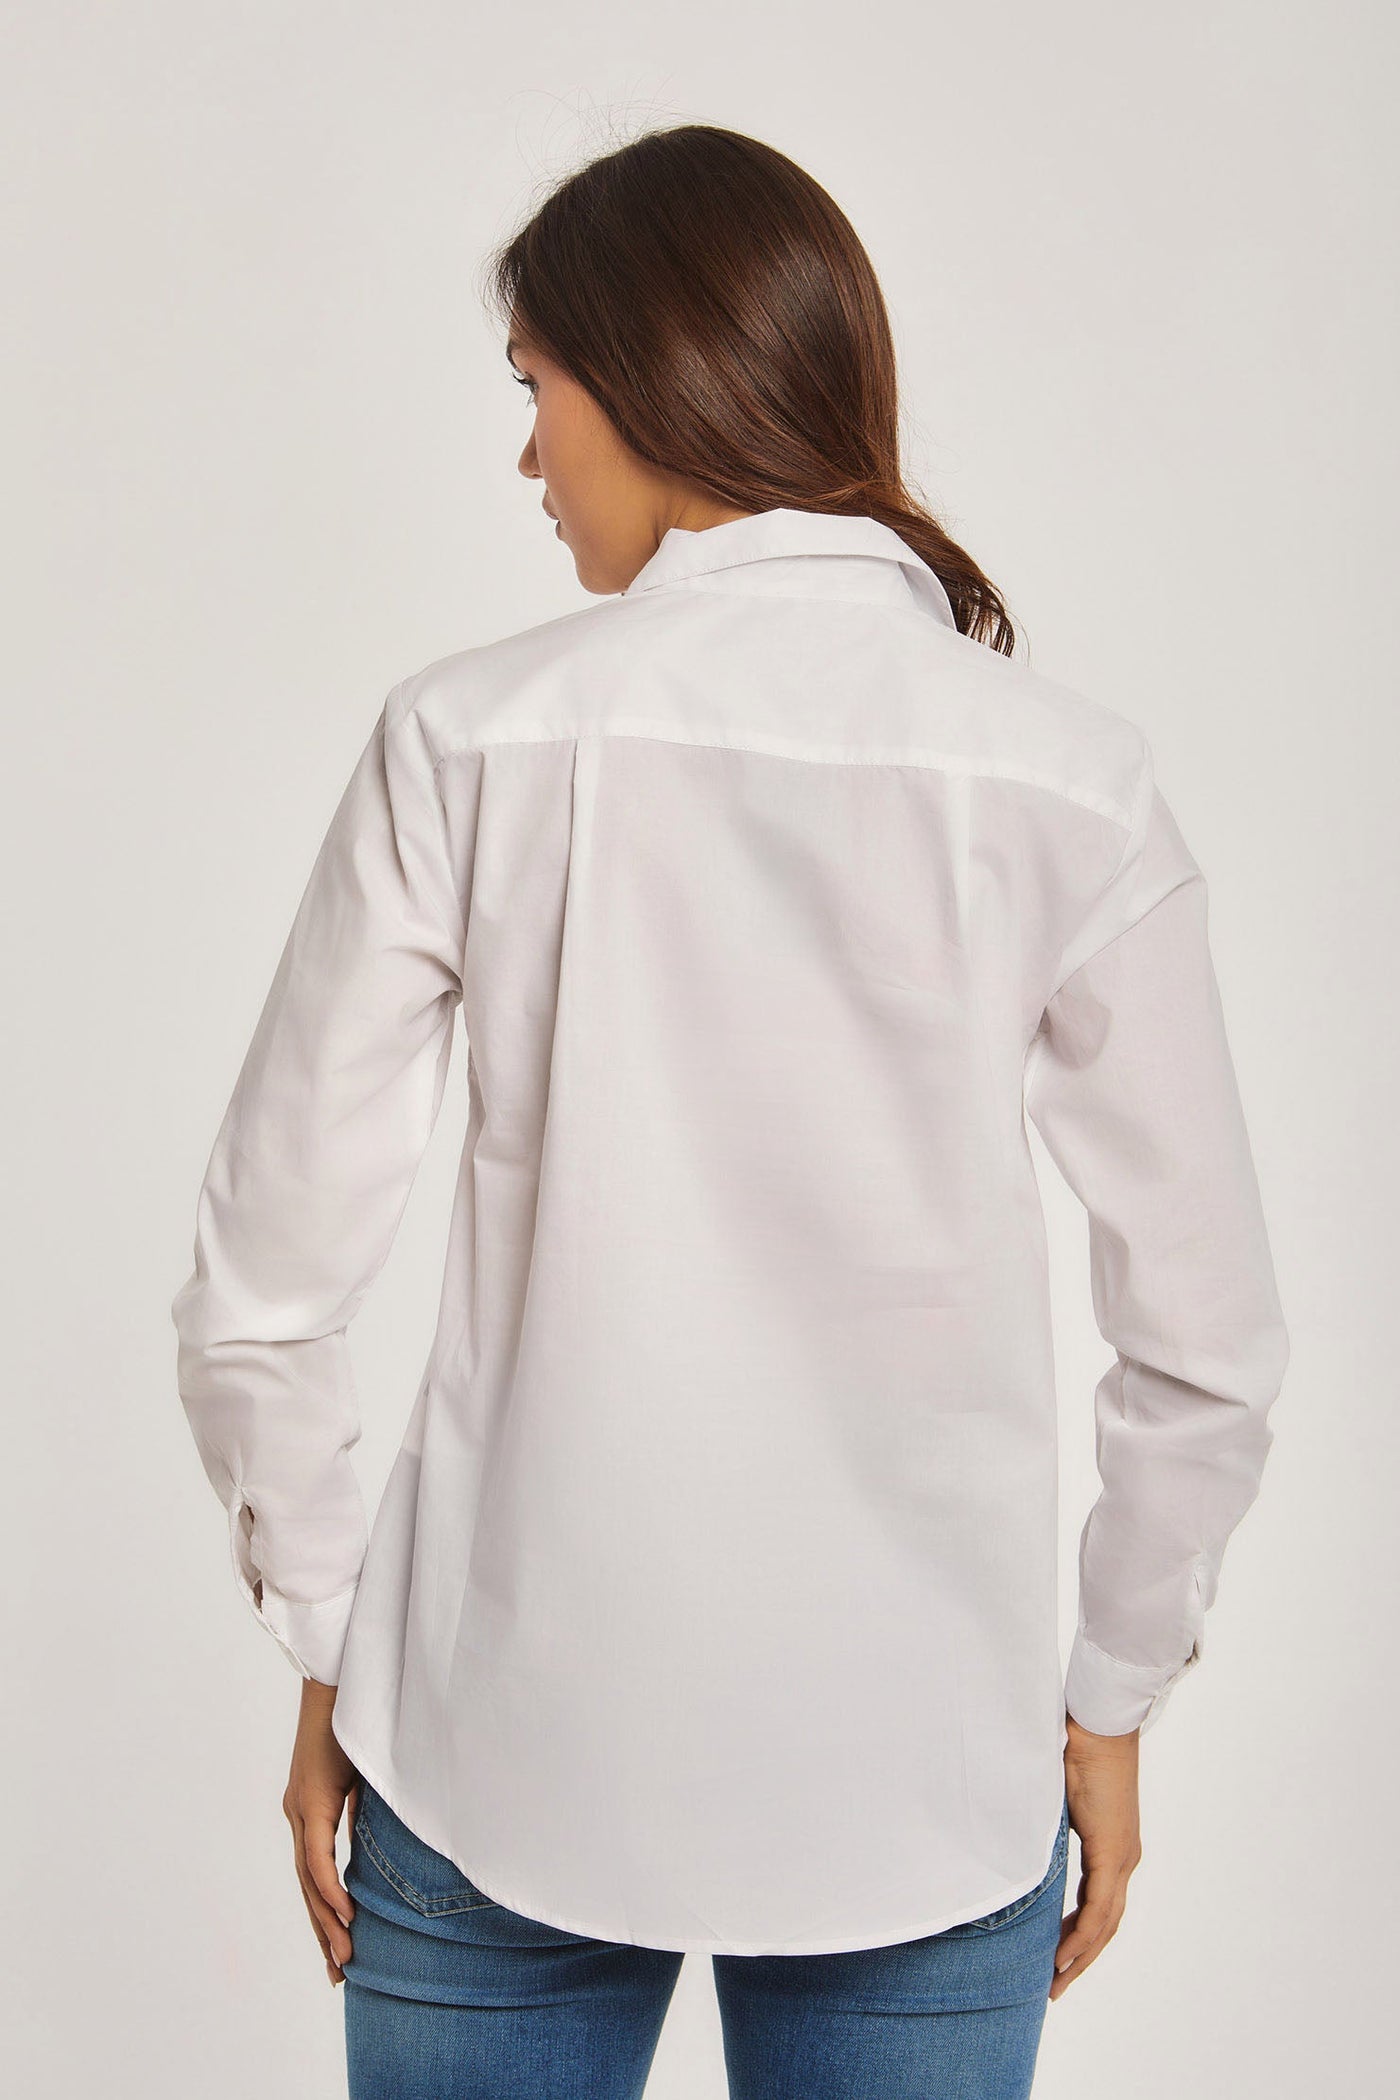 Shirt - Long Sleeves - Basic